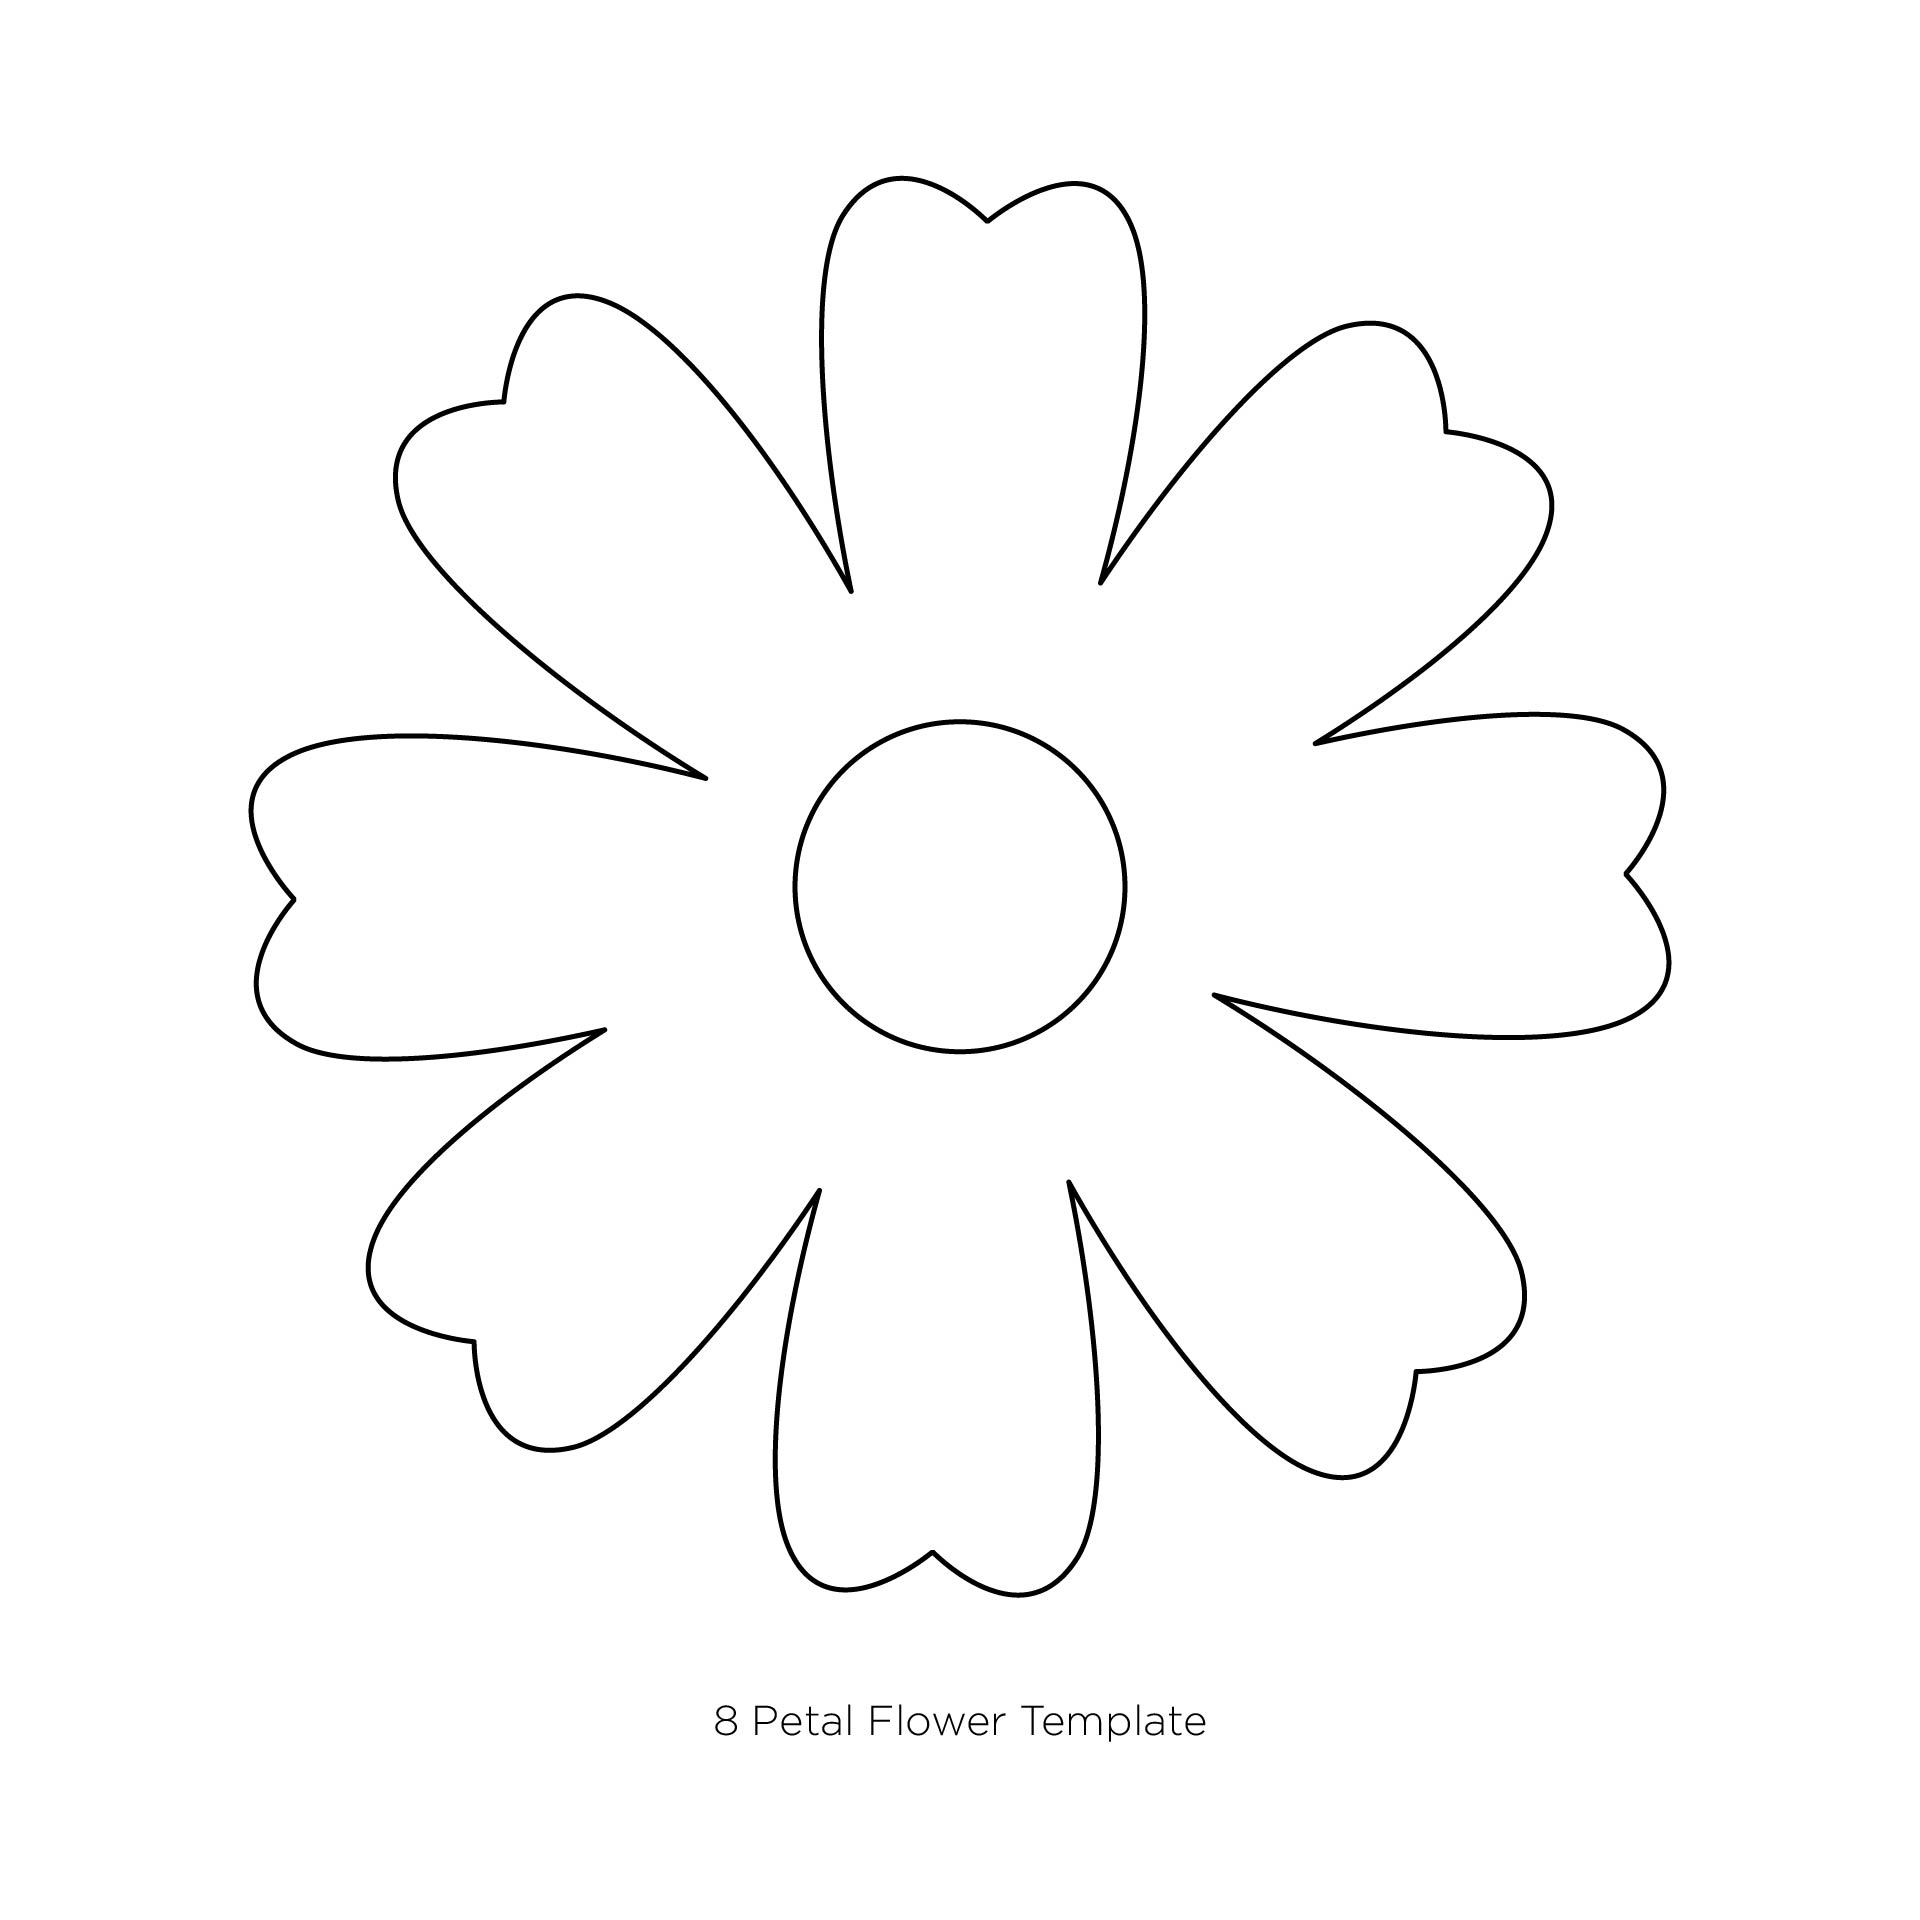 Printable 8 Petal Flower Template